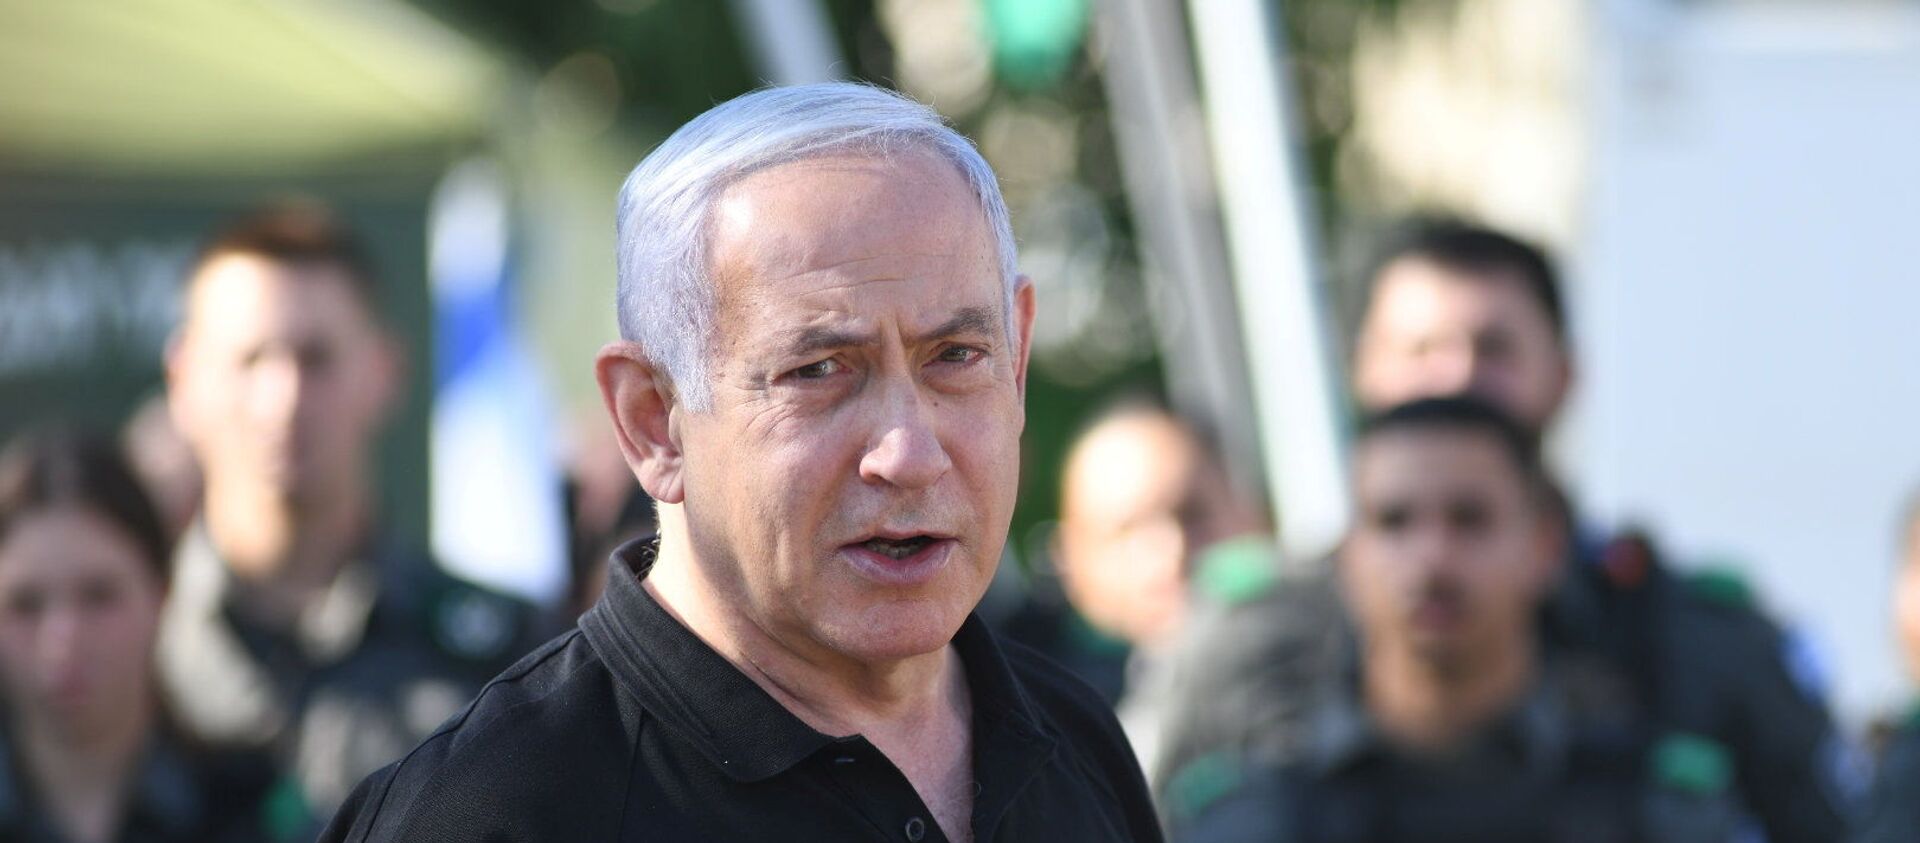 Israeli Prime Minister Benjamin Netanyahu speaks during meeting with Israeli border police following violence in the Arab-Jewish town of Lod, Israel May 13, 2021. - Sputnik International, 1920, 20.05.2021